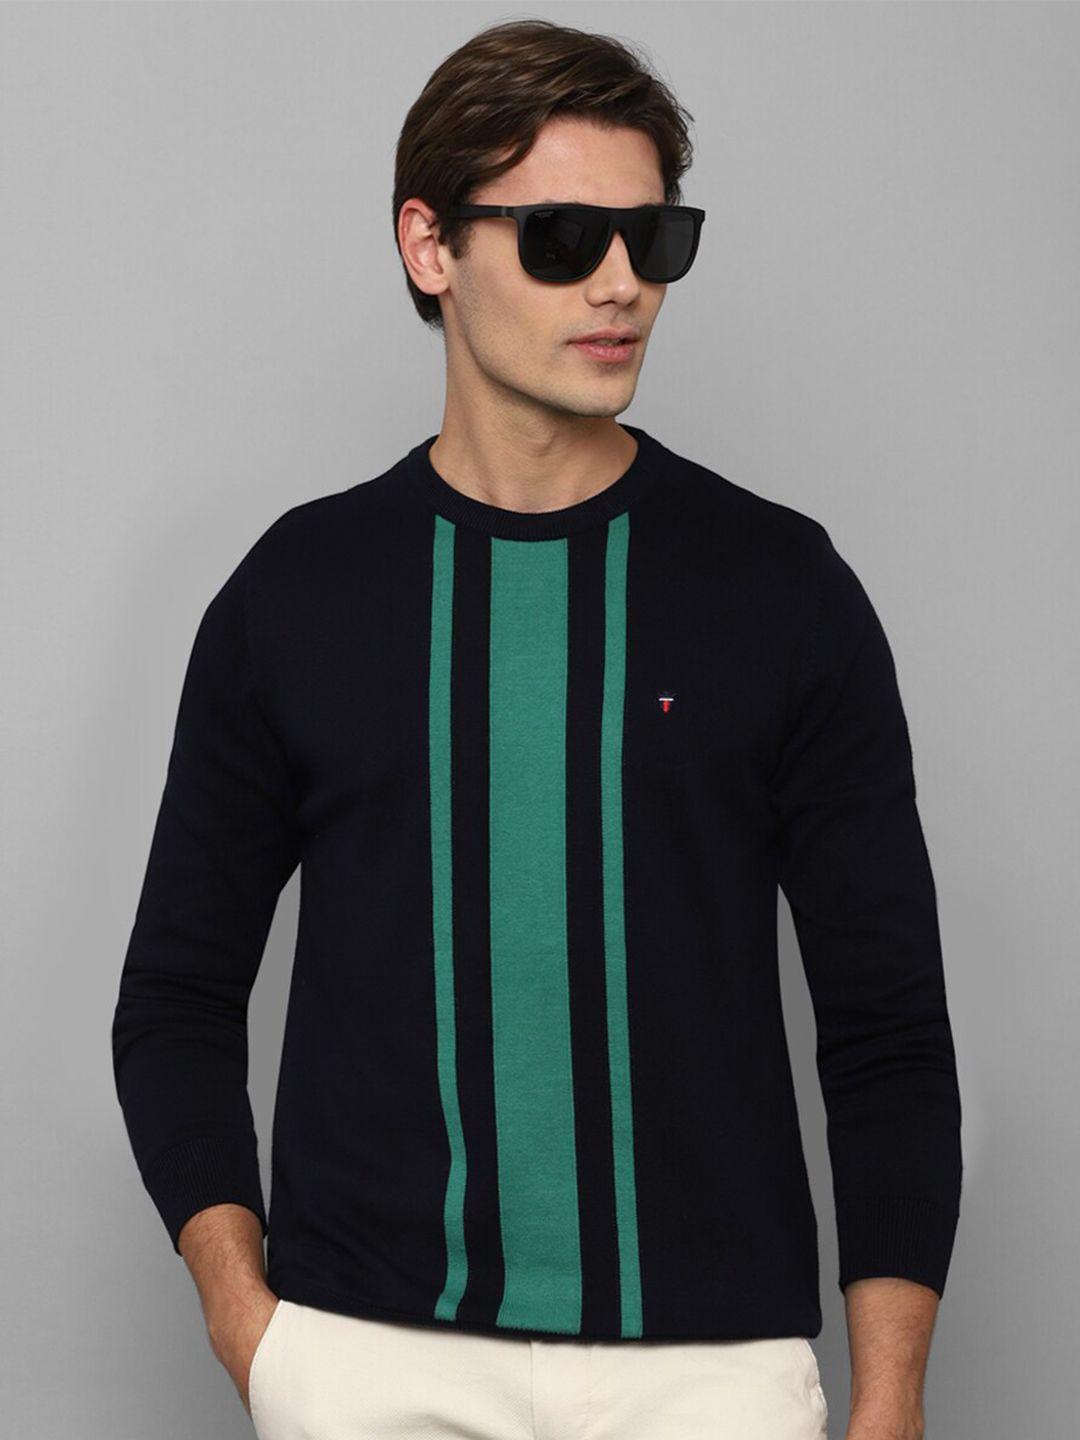 louis philippe sport men black & green colourblocked pullover pure cotton sweater